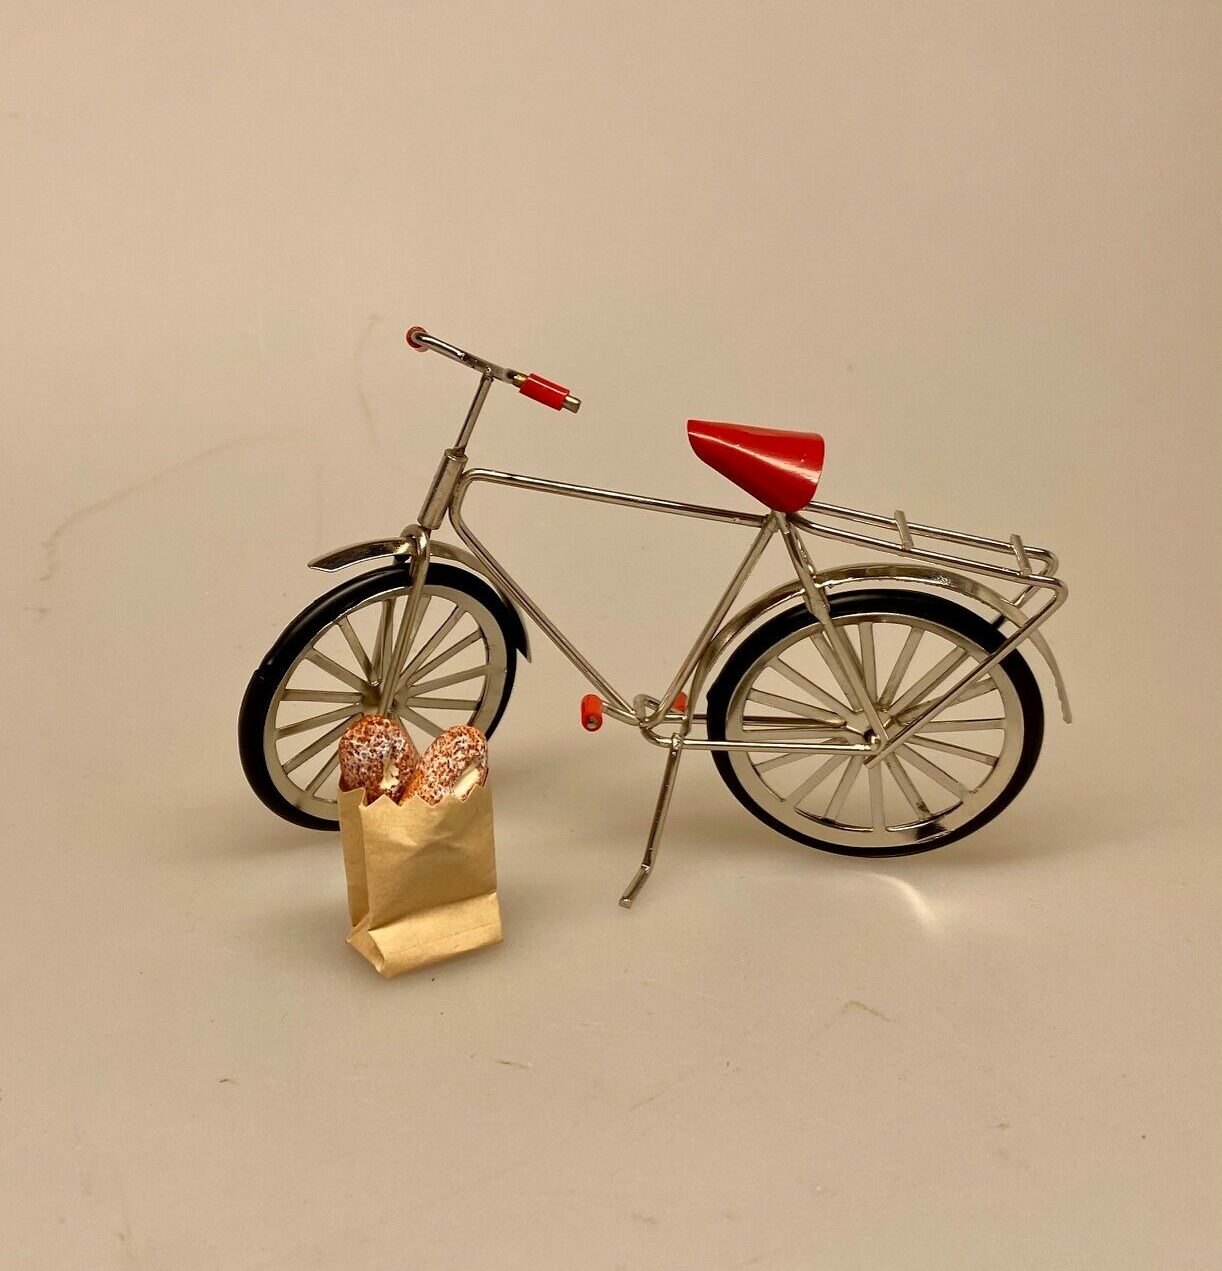 Cykel sølvfarvet metal miniature 1:12, Cykel grøn metal miniature 1:12 , gavekort, til cykel, gaveide, symbolsk, konfirmation, sangskjuler, cykler, cykling, rytter, motion, dukkehus, lille, miniature, tilbehør, dukkehusting, biti, ribe